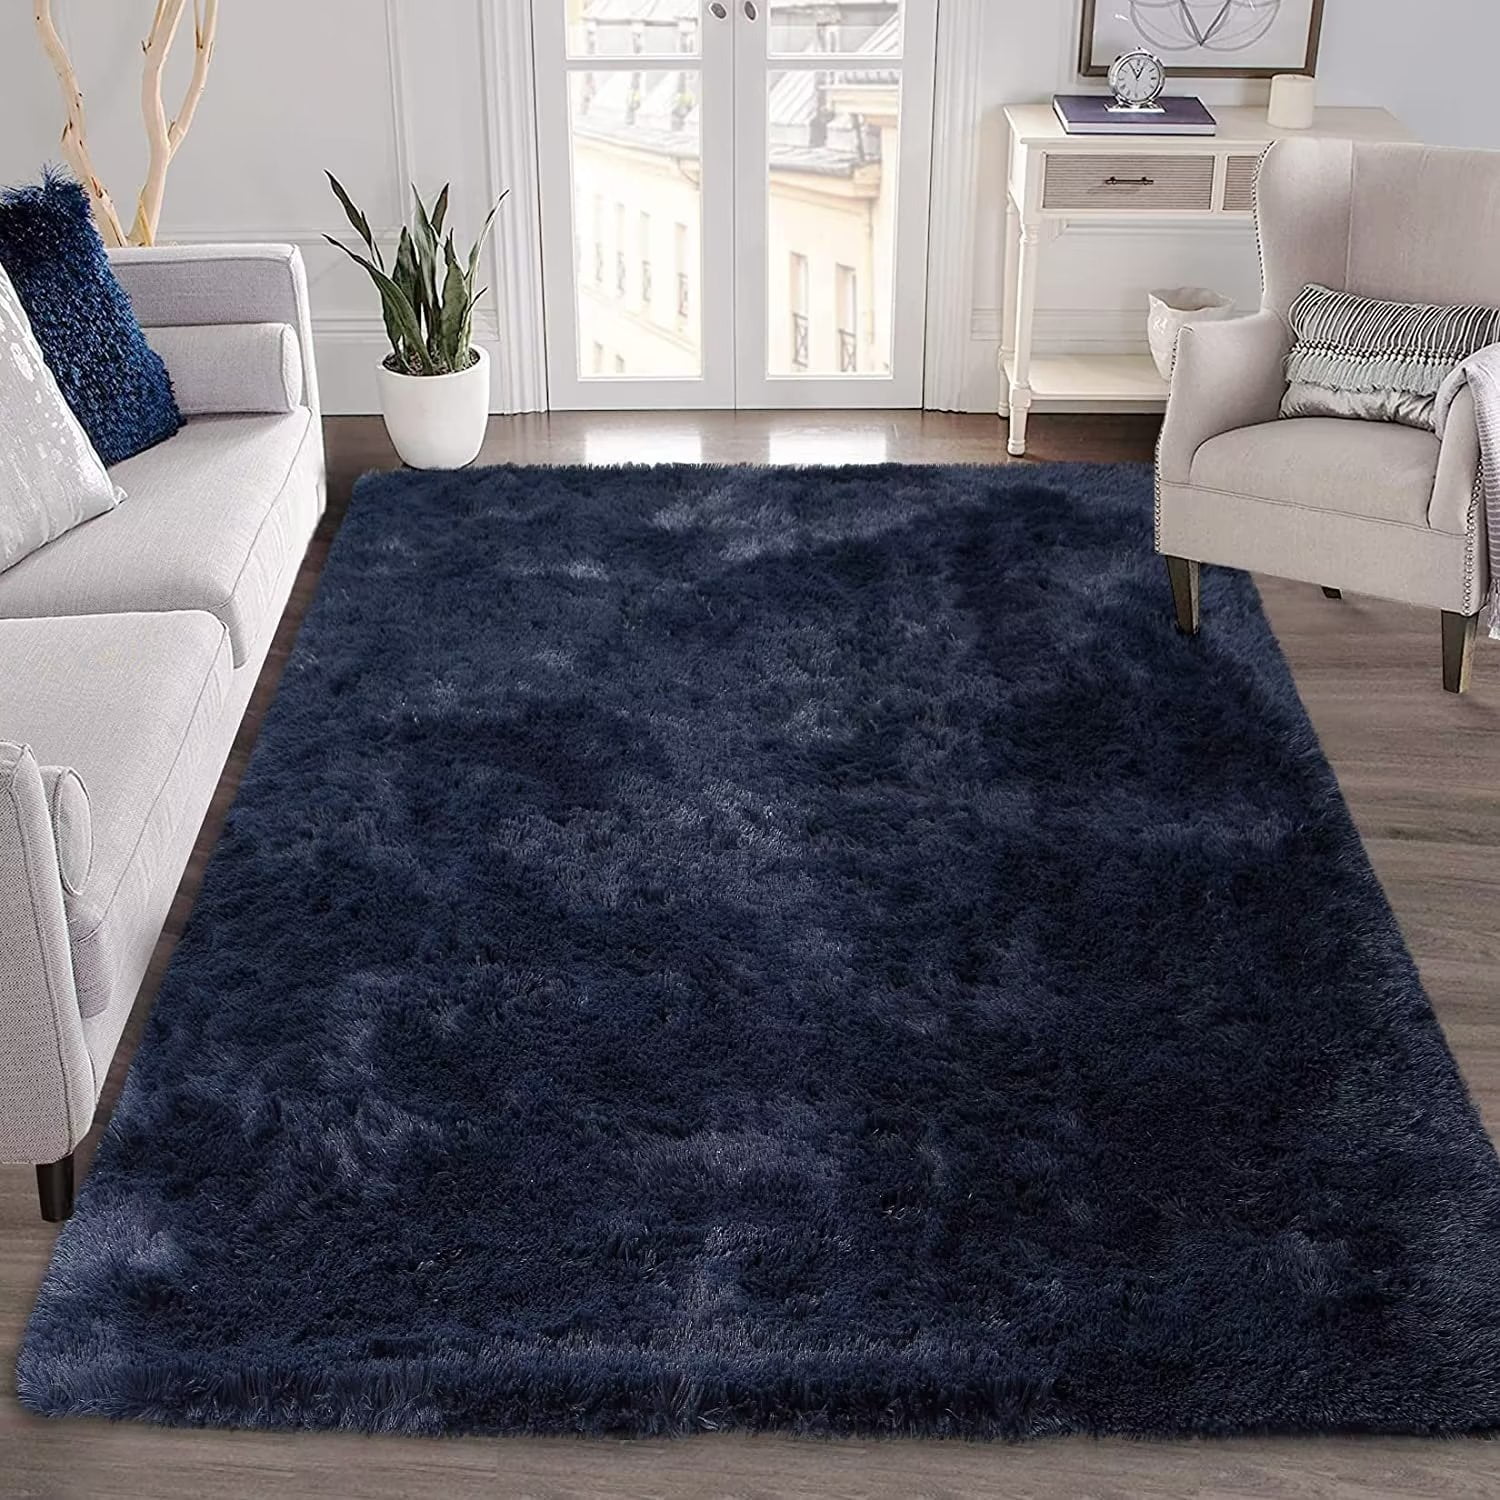 shag area rug furry shaggy 8x10 feet extra large fluffy shag rugs carpet  shag rug for living room bedroom home decor, dark navy blue